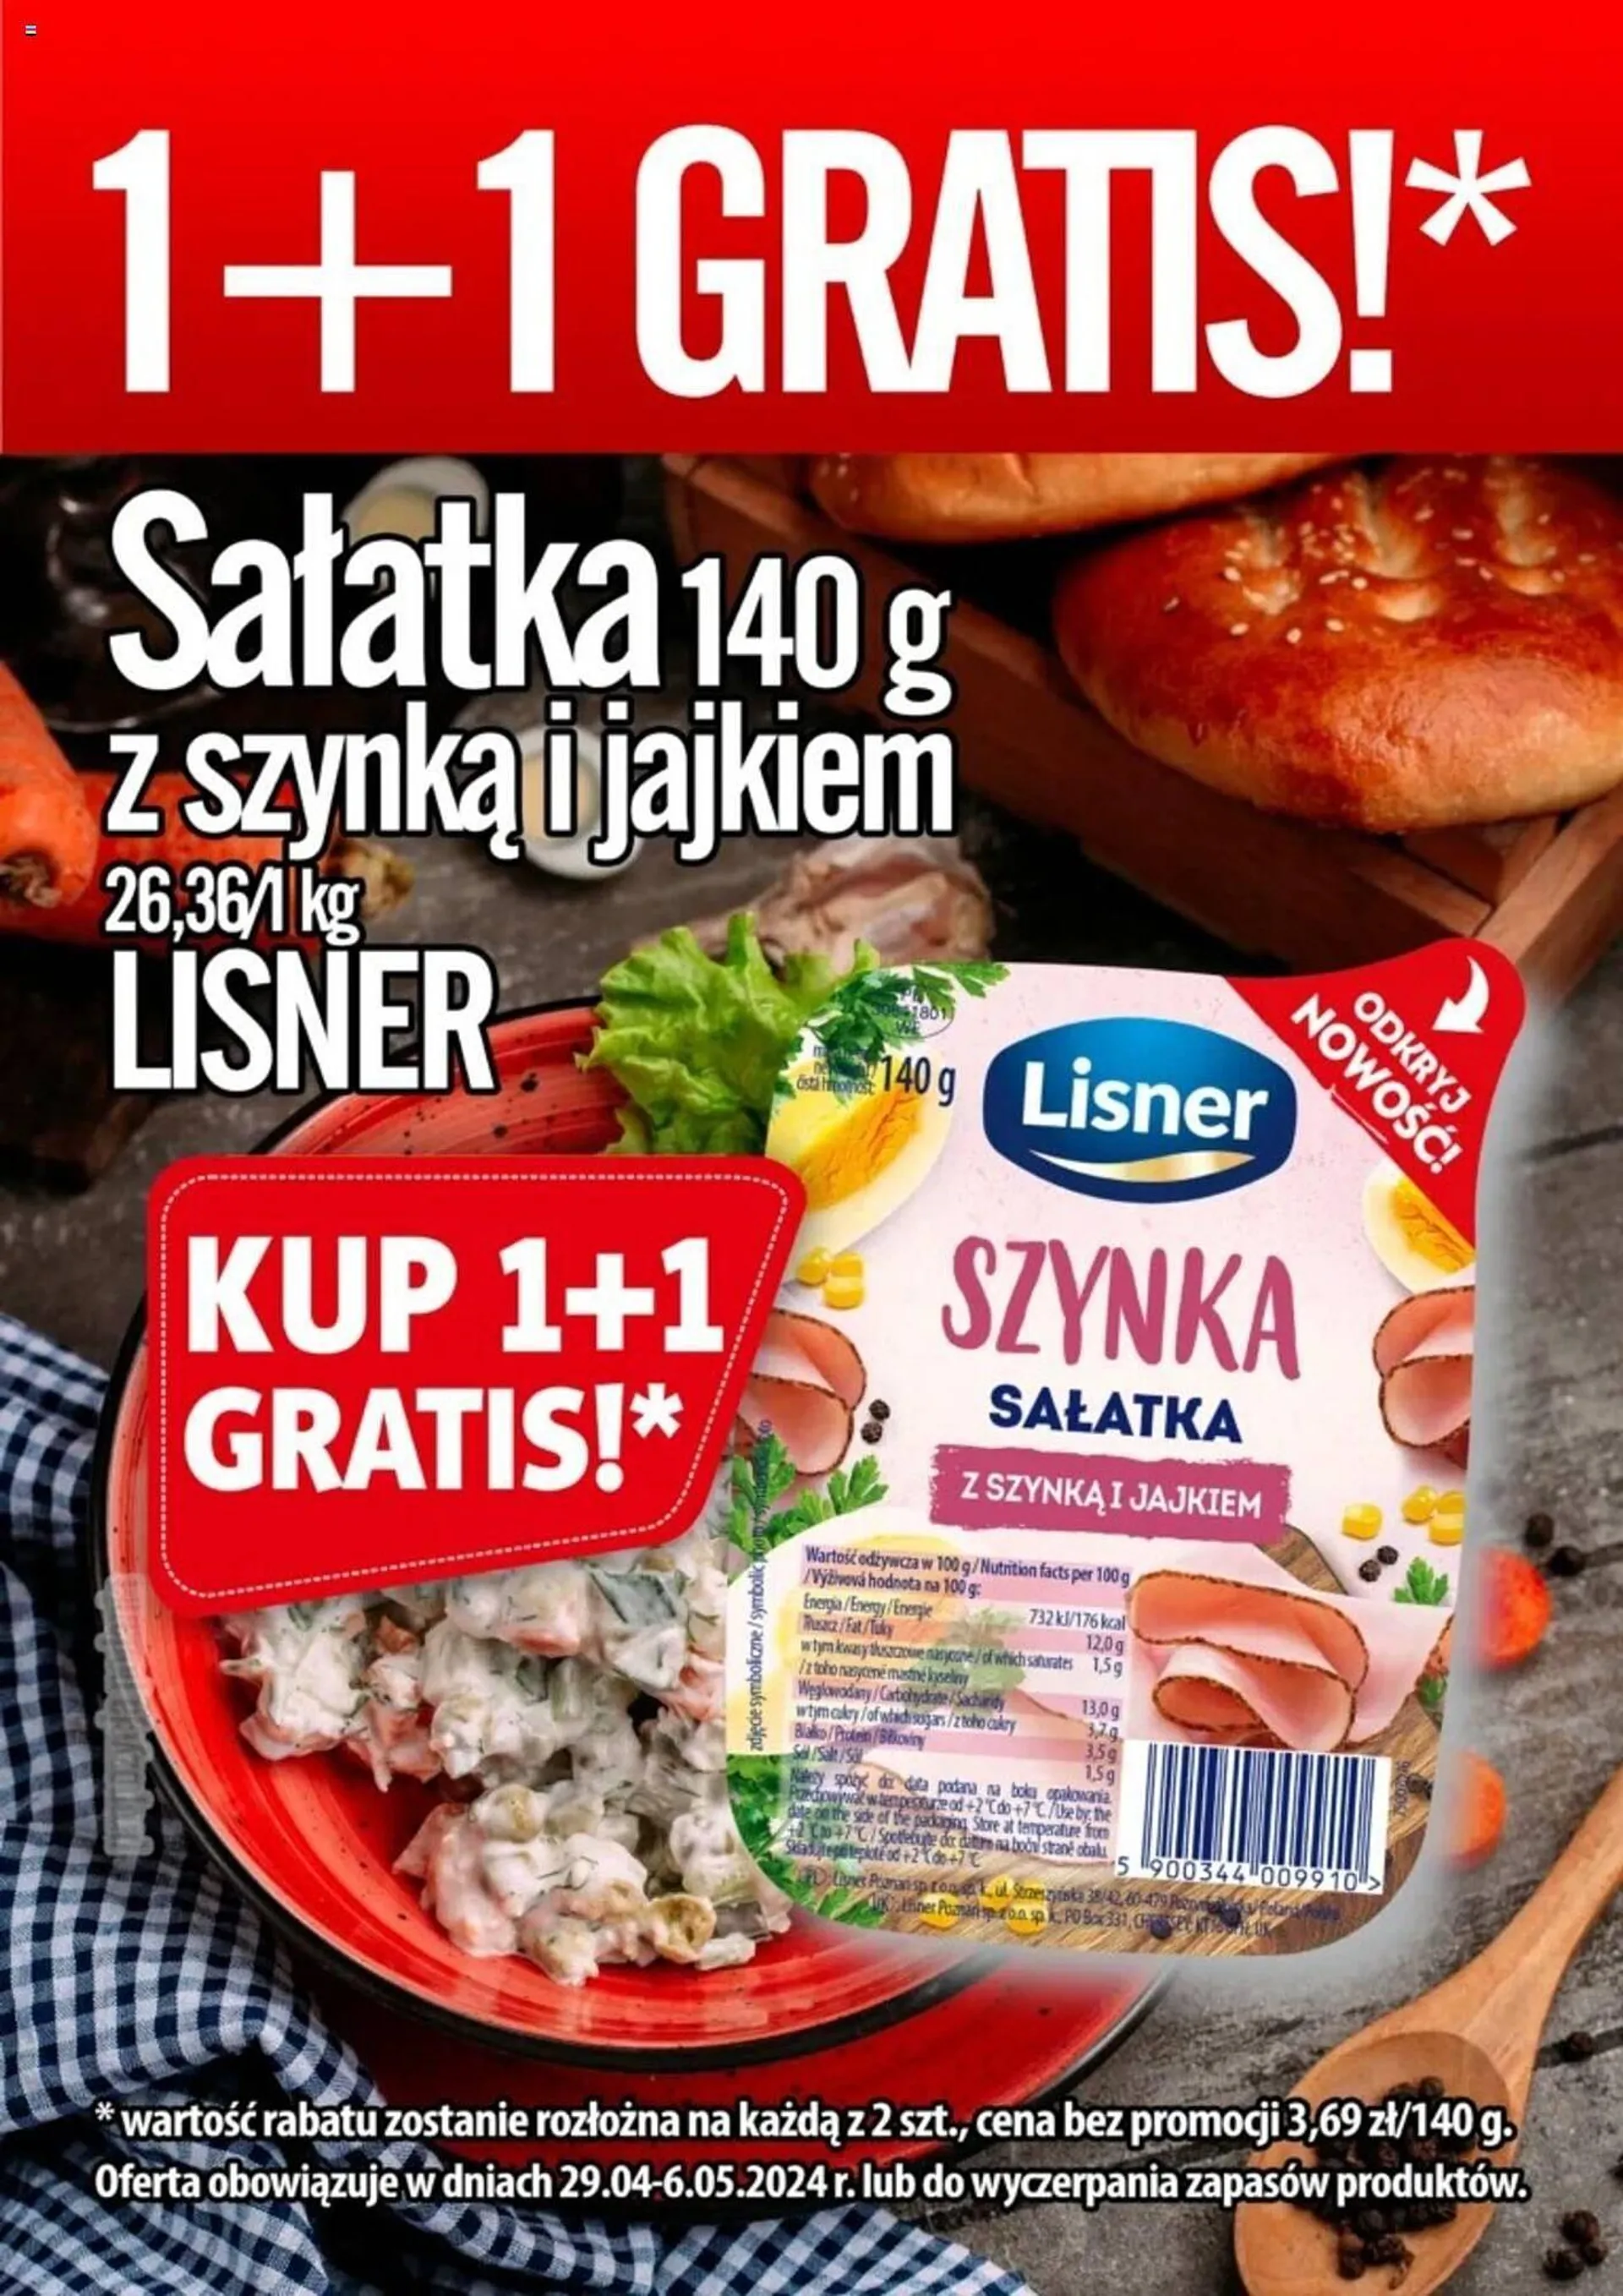 Prim Market gazetka - 1